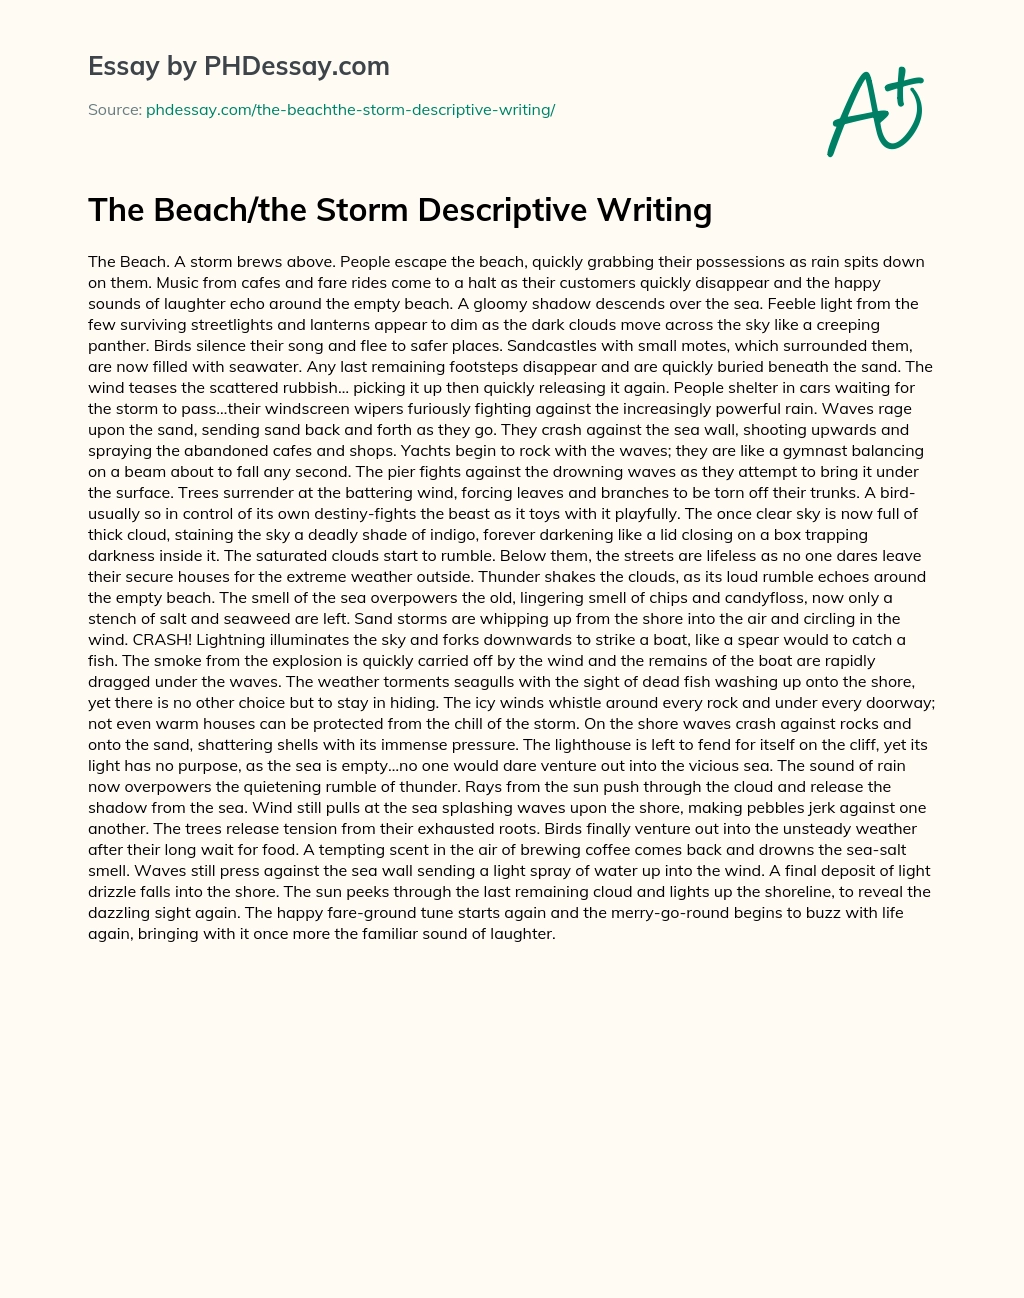 Buy a descriptive essay about the beach